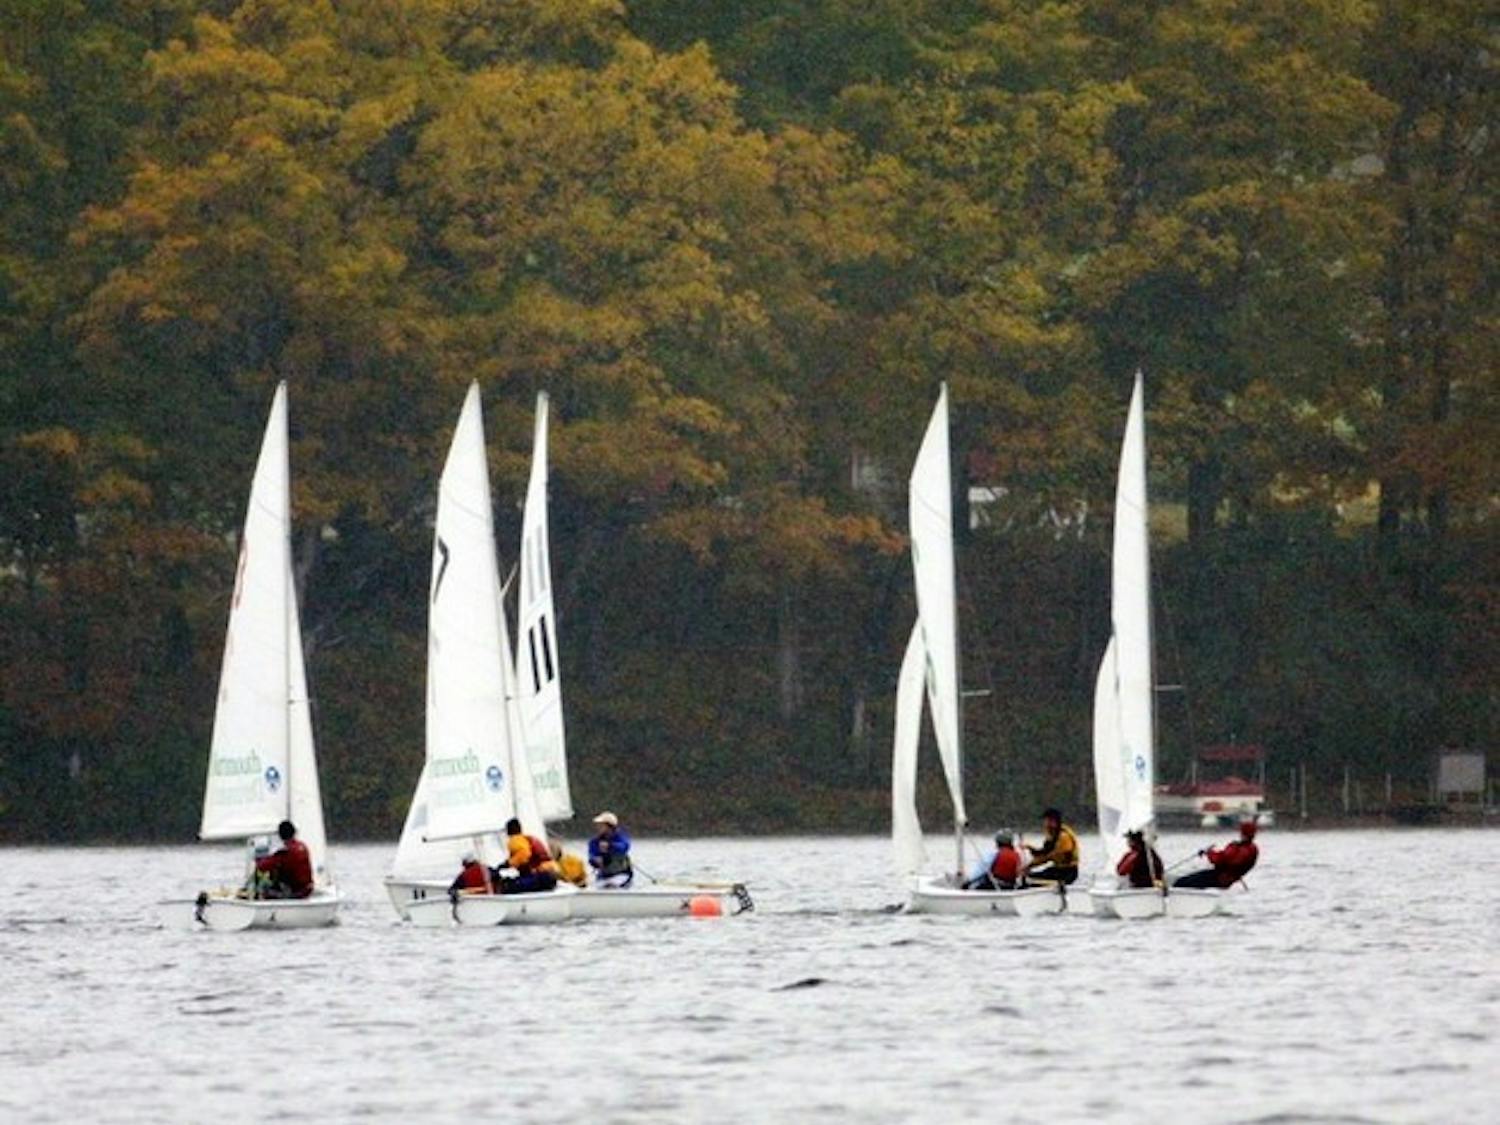 Dartmouth's sailing teams each braved tough weekend conditions to advance to the Atlantic Coast Championships.dfl;skajl;ghasd;lghasd;lghasdl